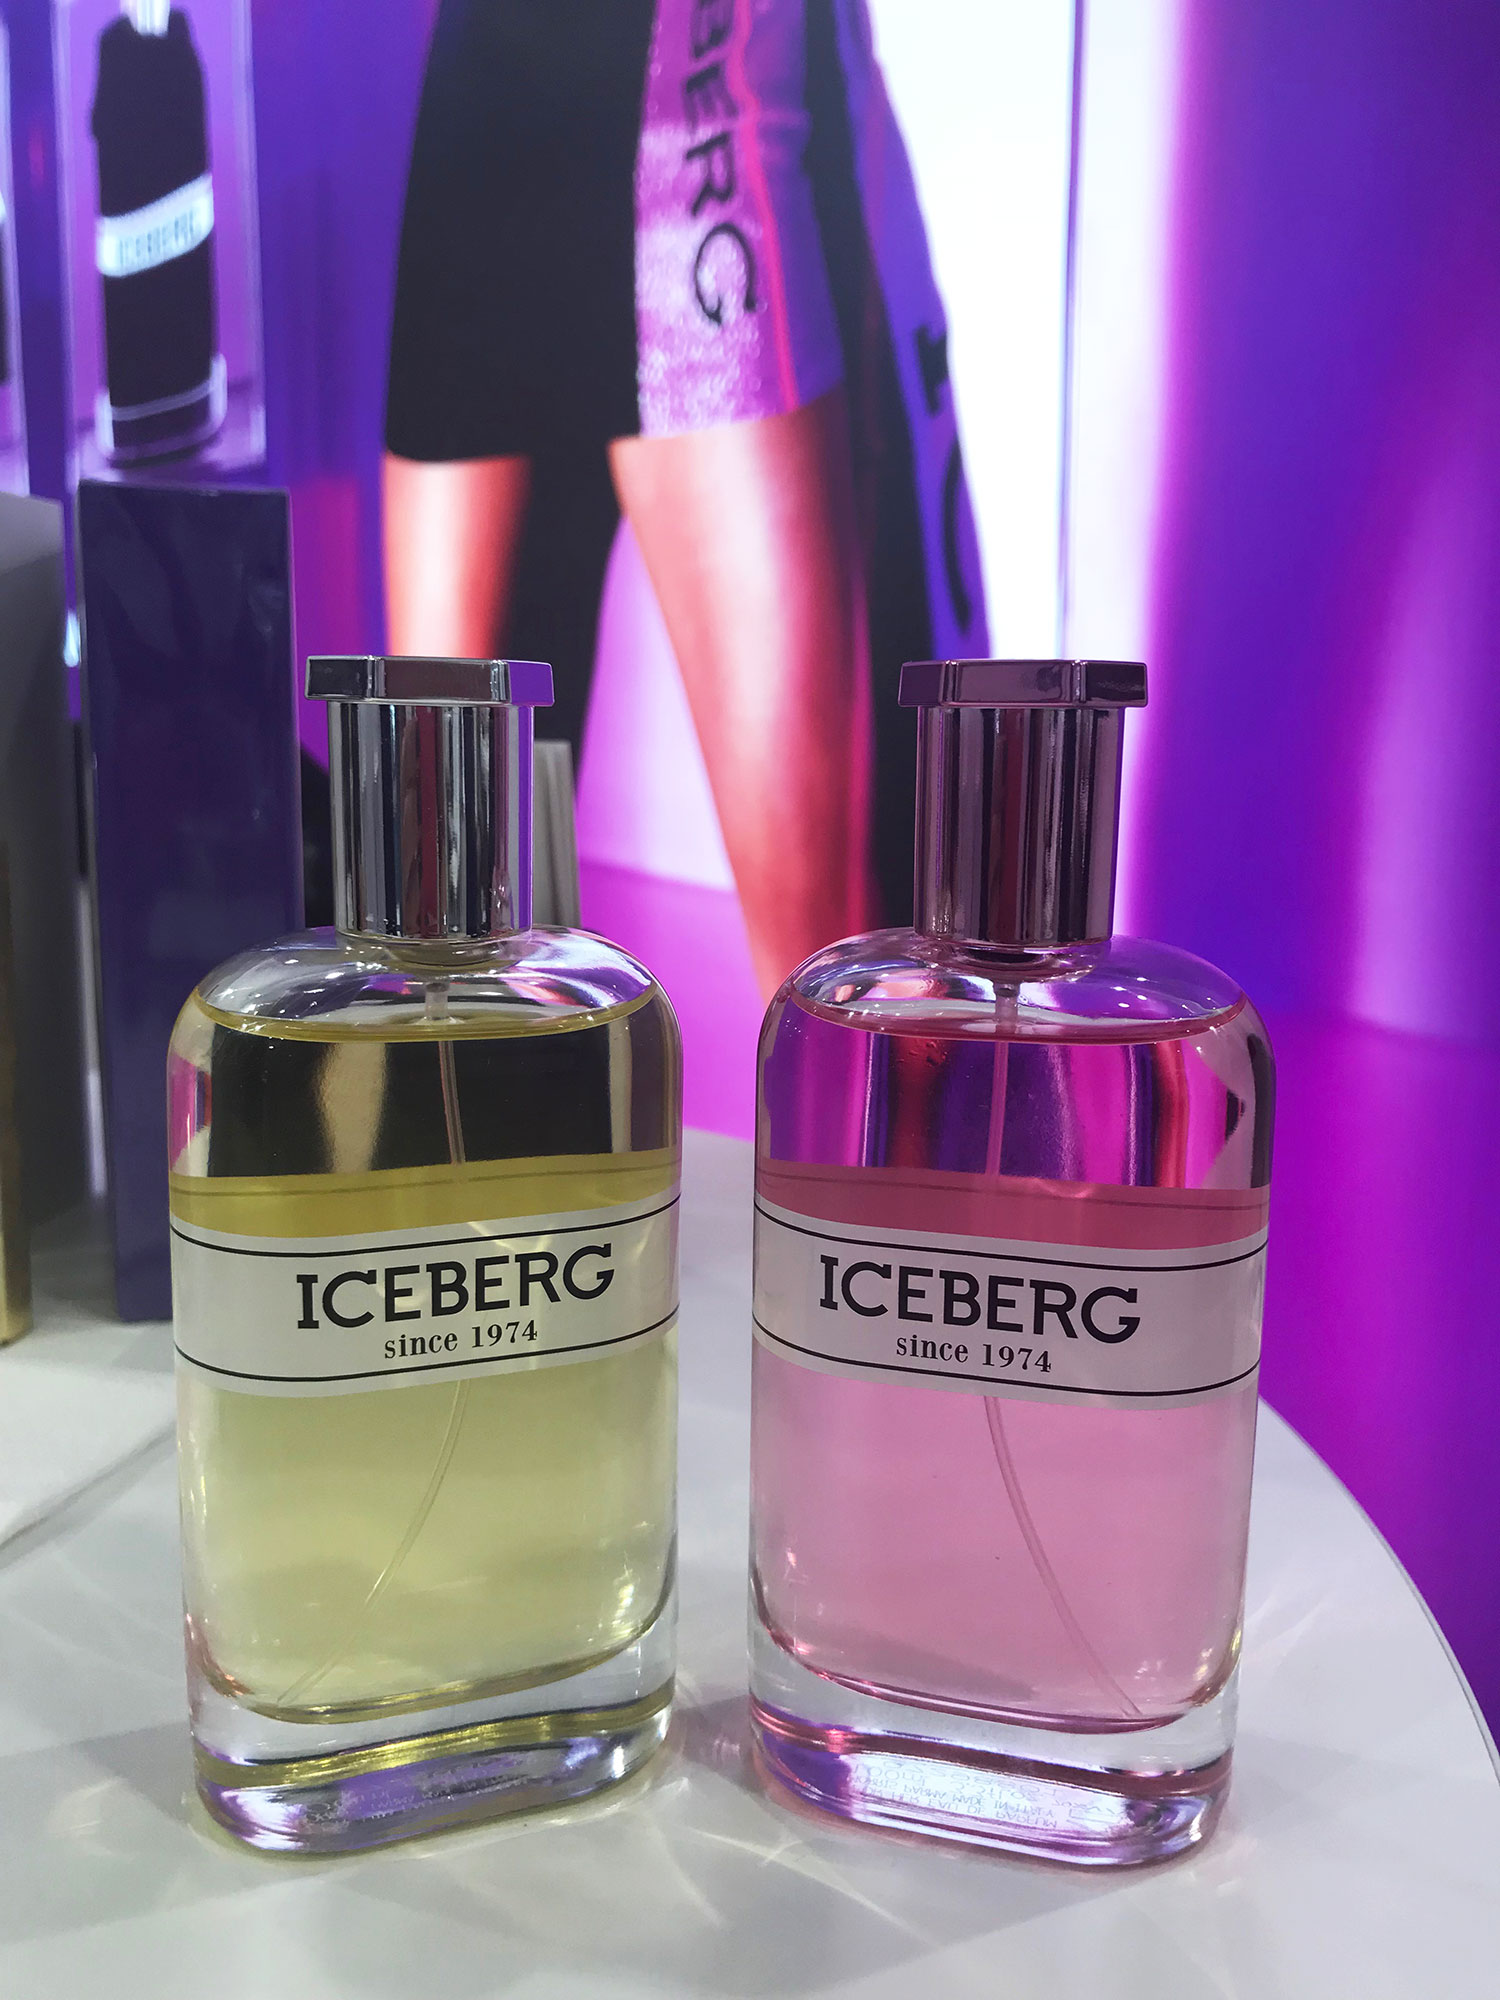 Iceberg Since 1974 by Iceberg Perfumes